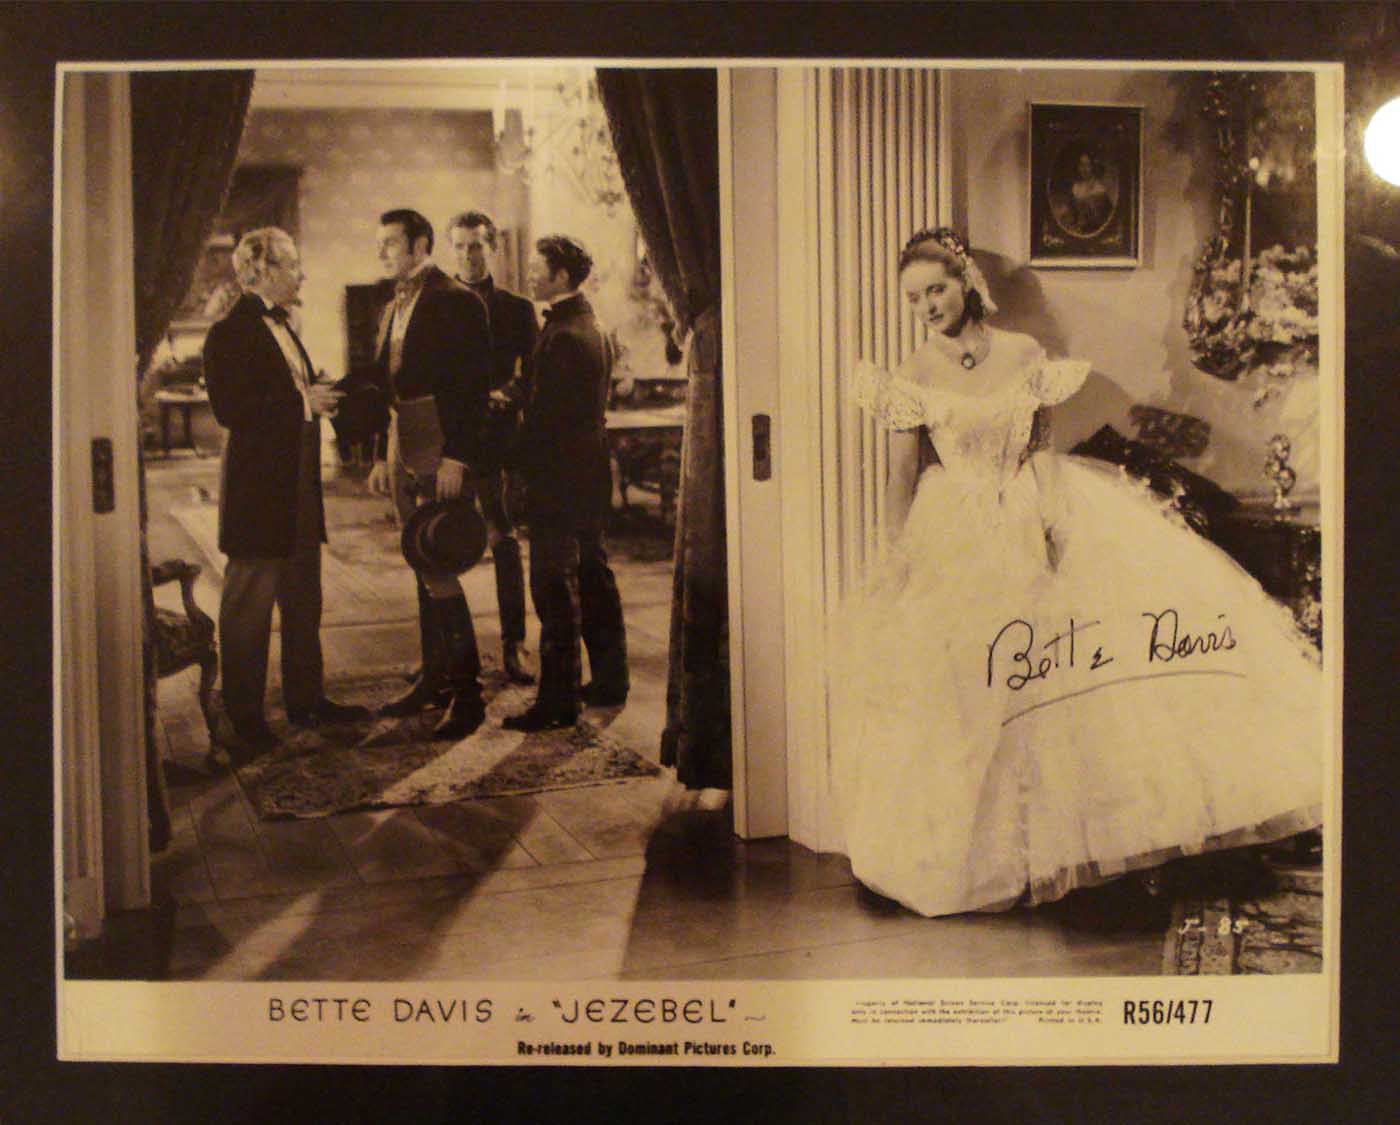 Bette Davis Autographed Lobby Card from Jezebel (1938)